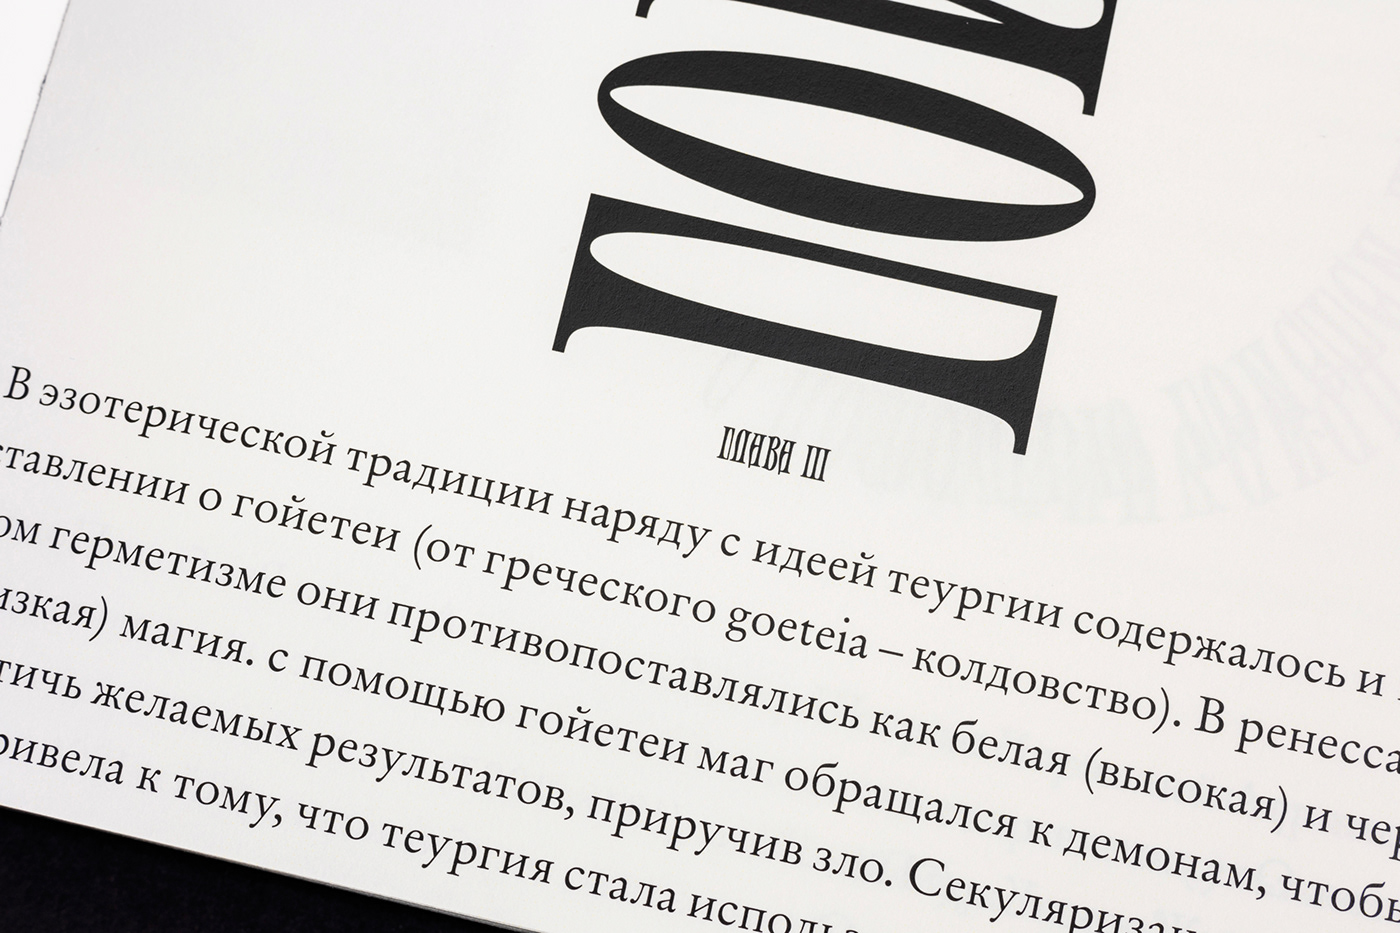 book book design book cover editorial design  typography   print